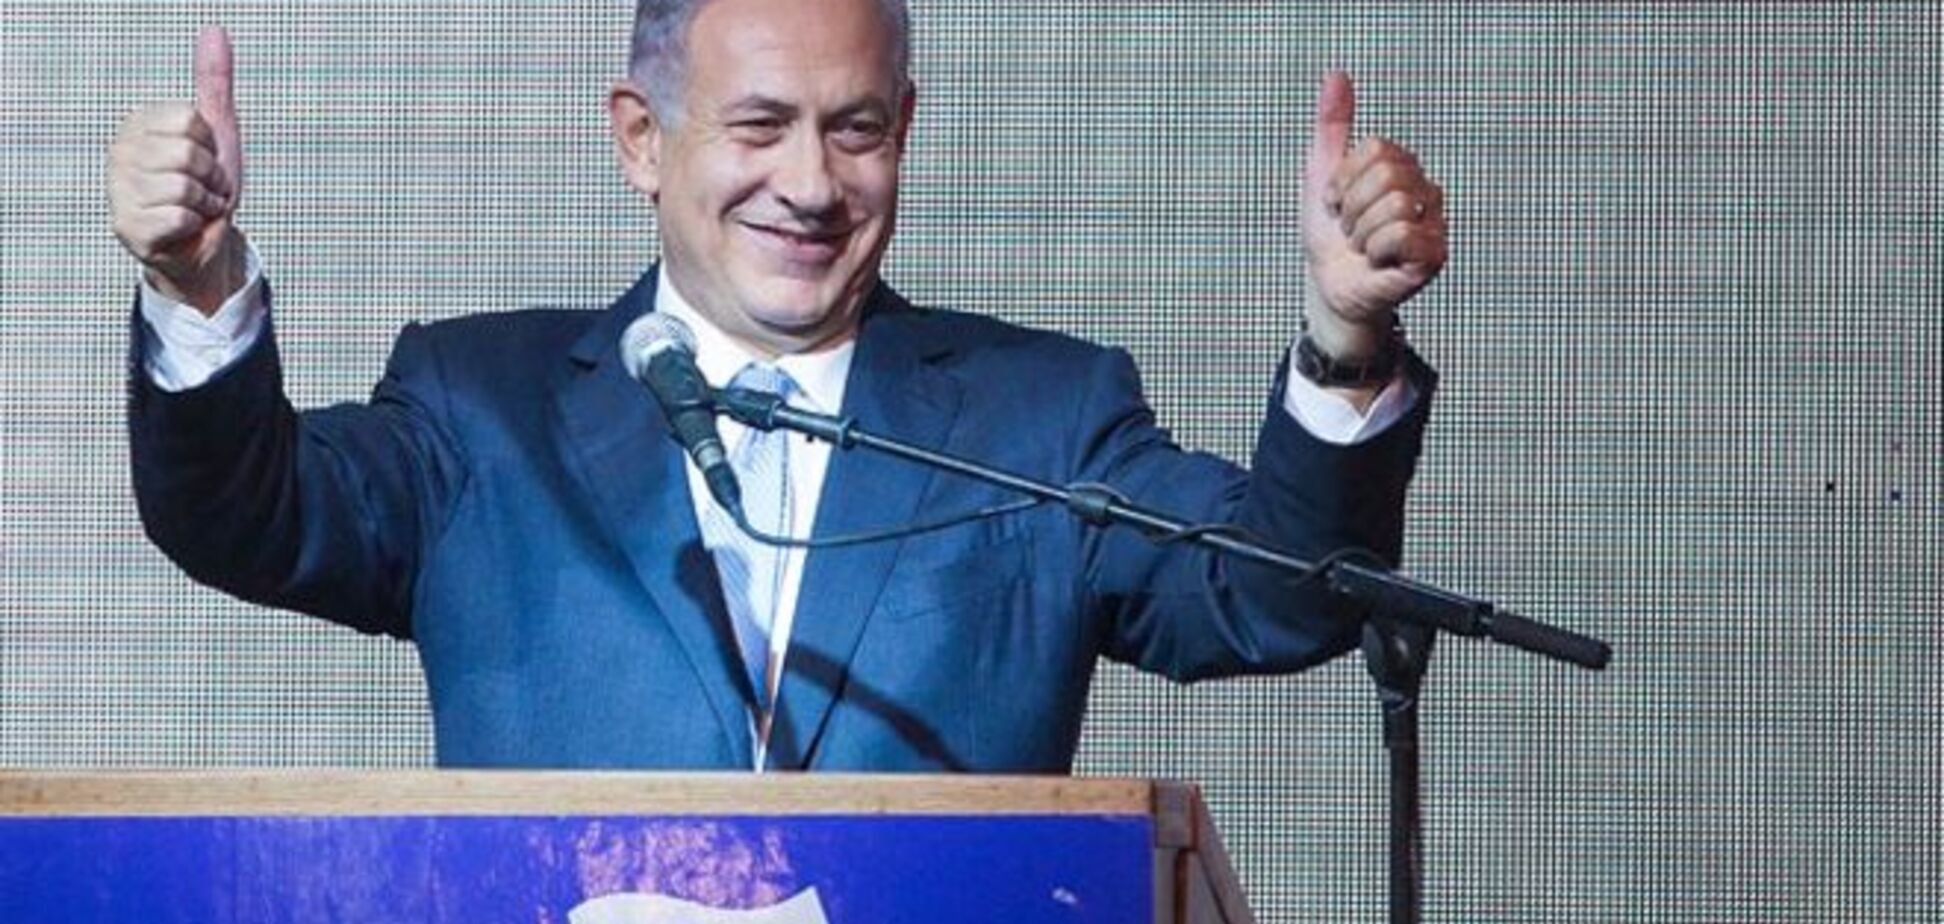 Нетаньяху празднует победу: фоторепортаж 